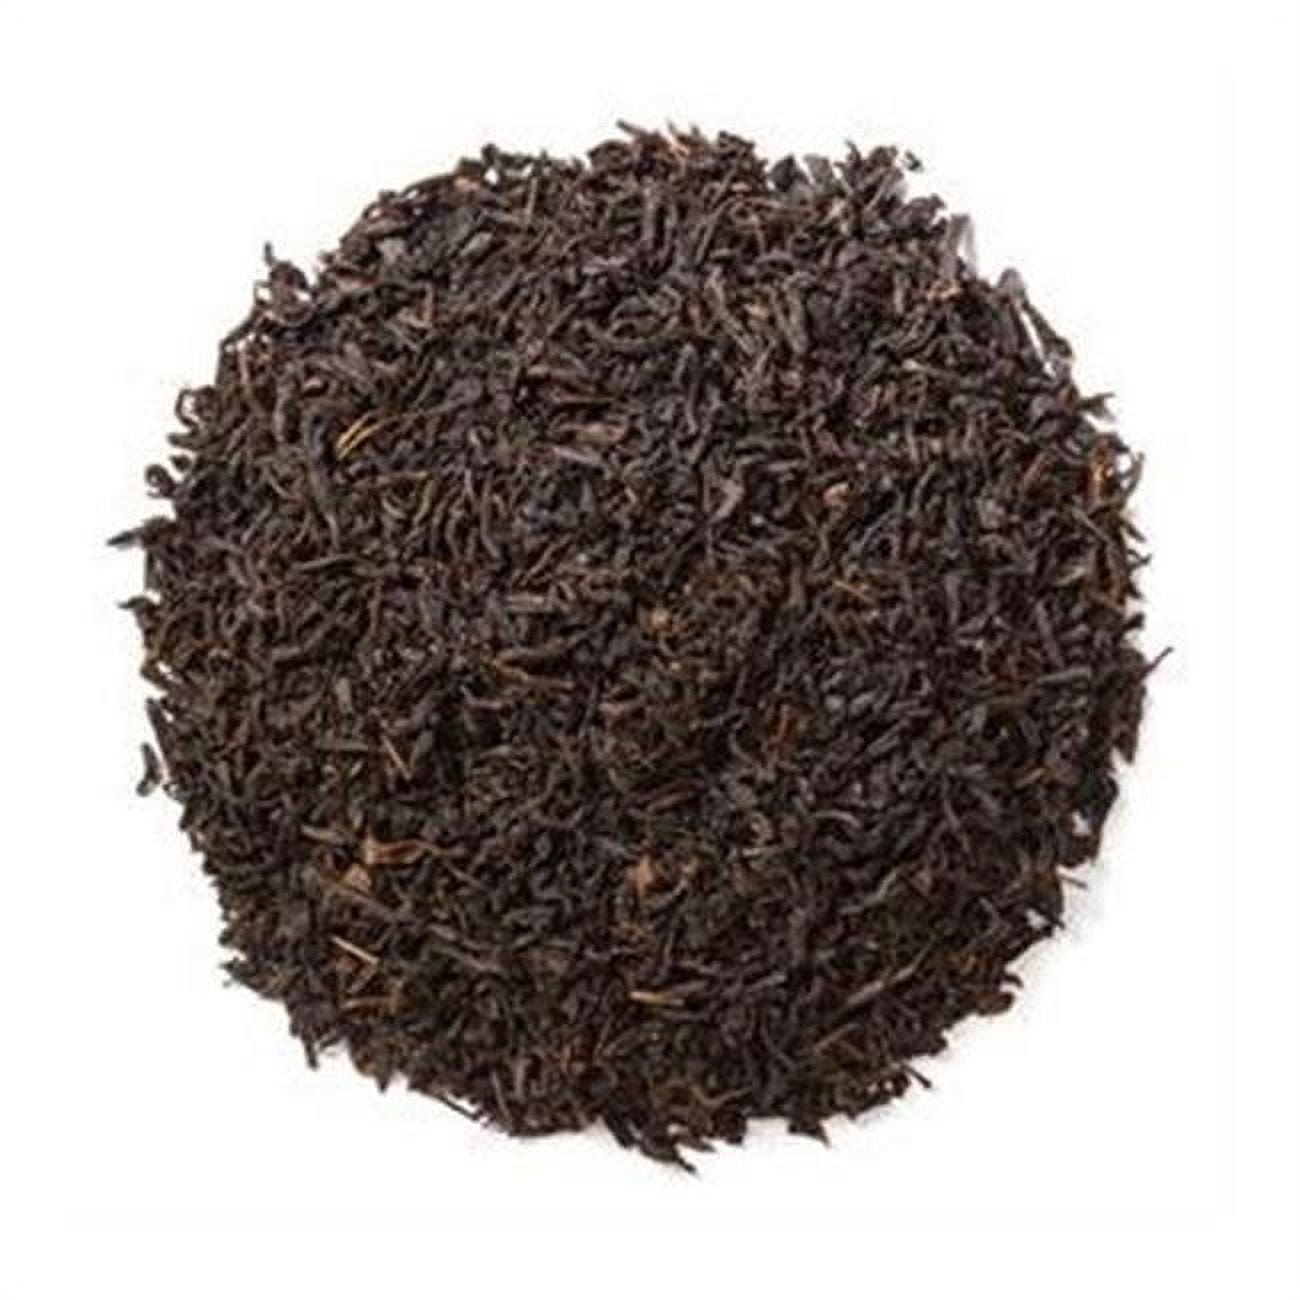 Picture of Davidsons Organics 7309 2 oz Keemun Congou Sampler Tea - Pack of 6